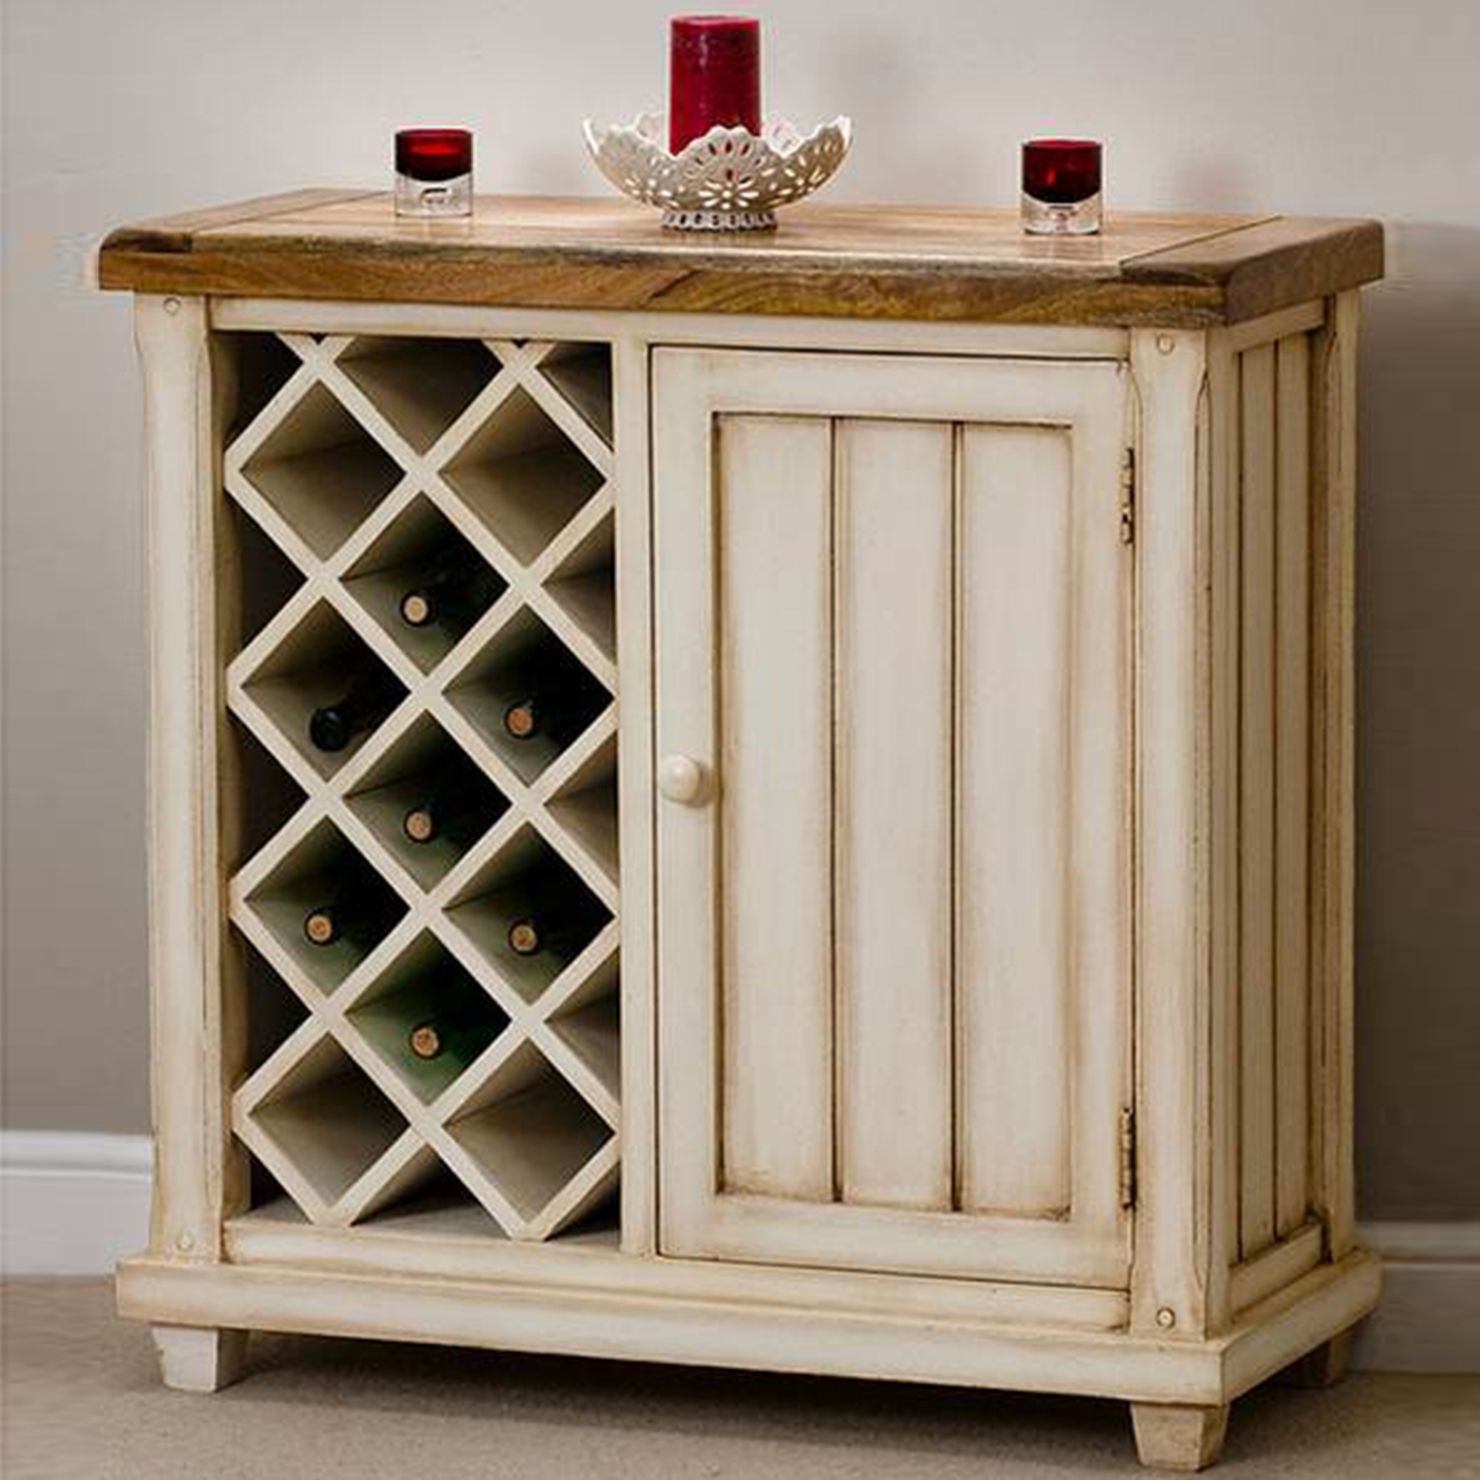 Sideboard with wine rack